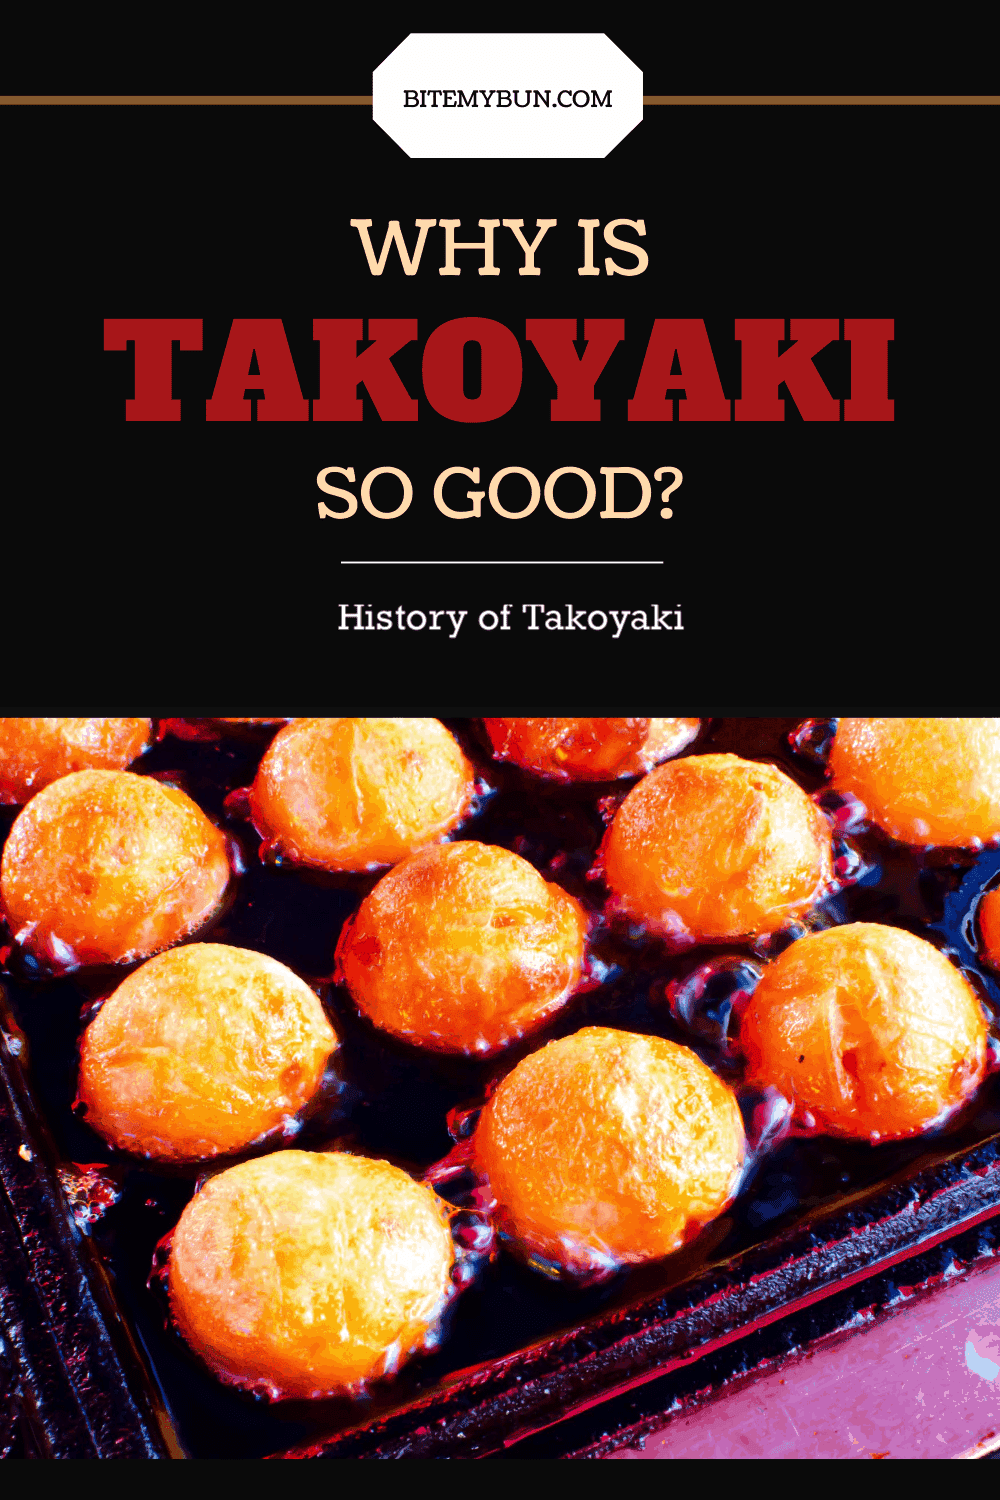 Why is takoyaki so good